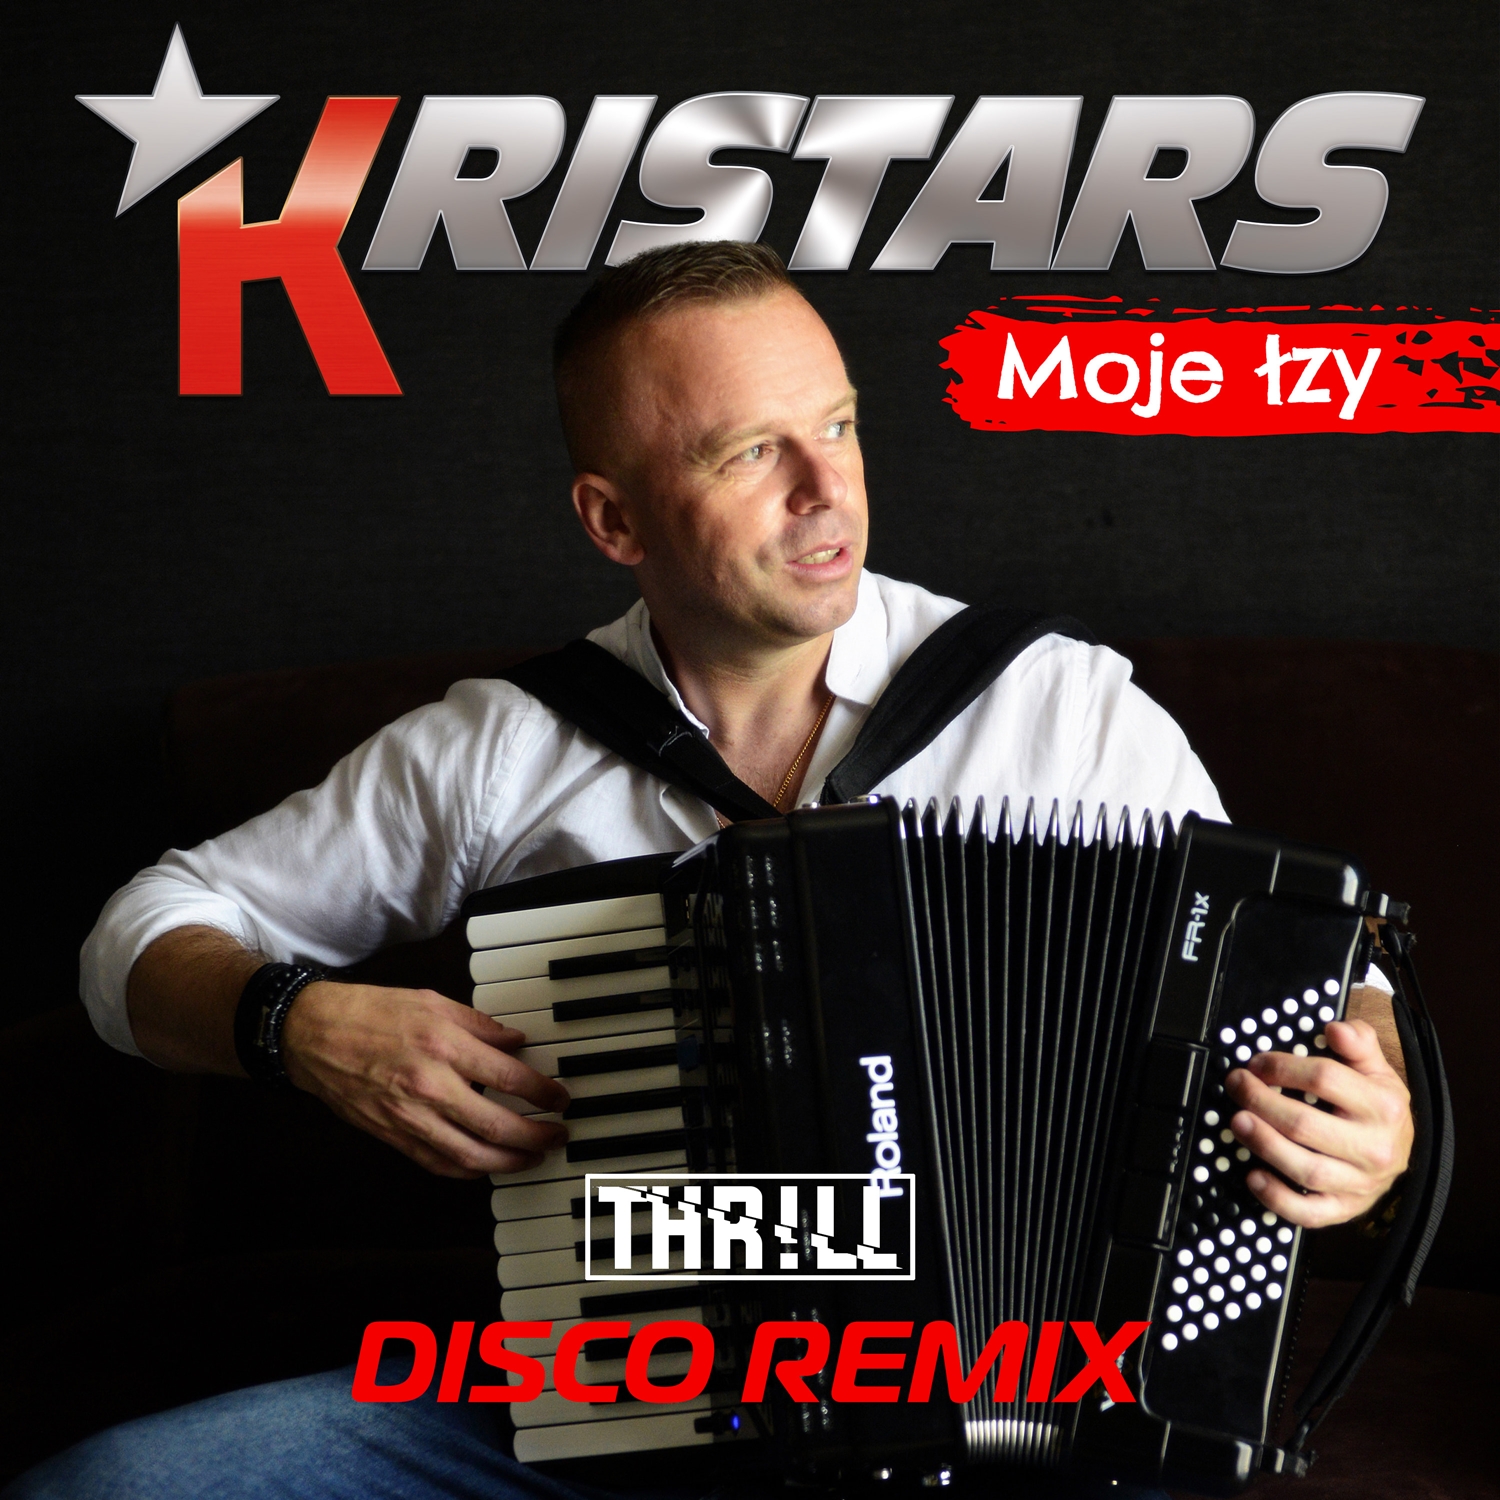 Kristars - Moje Łzy (Thr!ll Disco Remix)